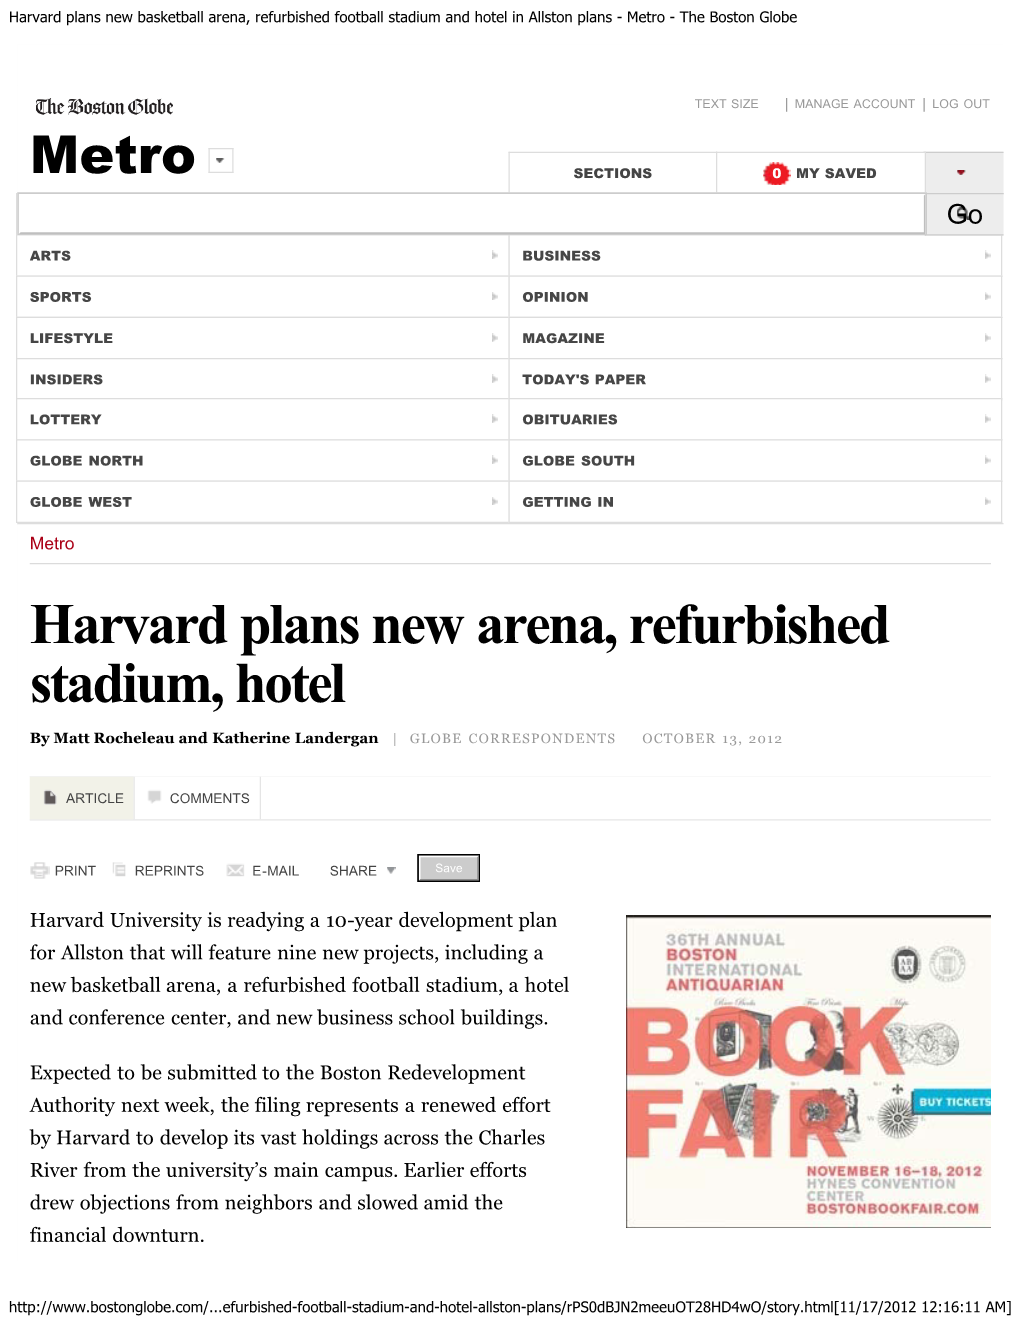 Harvard Plans New Basketball Arena, Refurbished Football Stadium and Hotel in Allston Plans - Metro - the Boston Globe